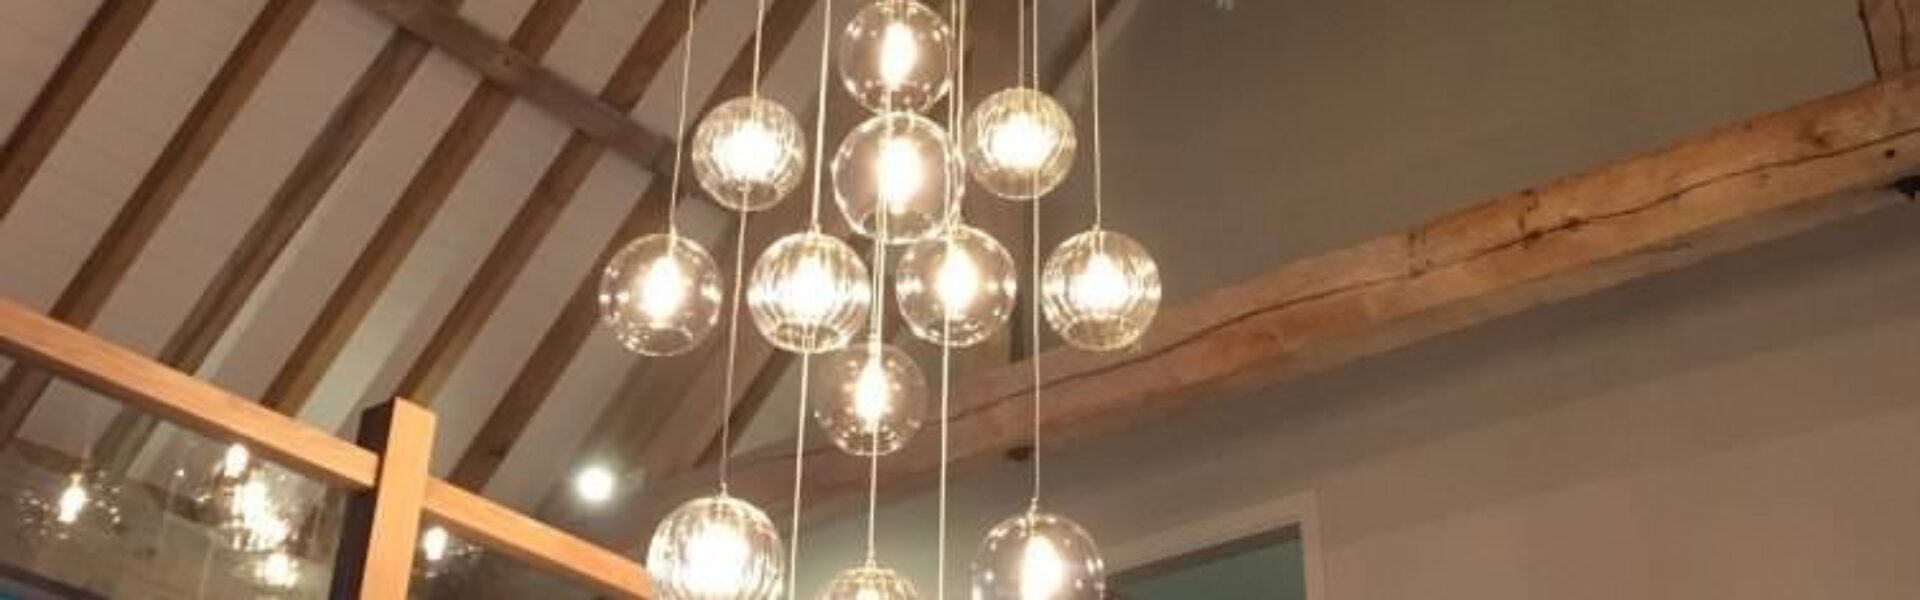 Large, custom made, glass globe cluster chandelier